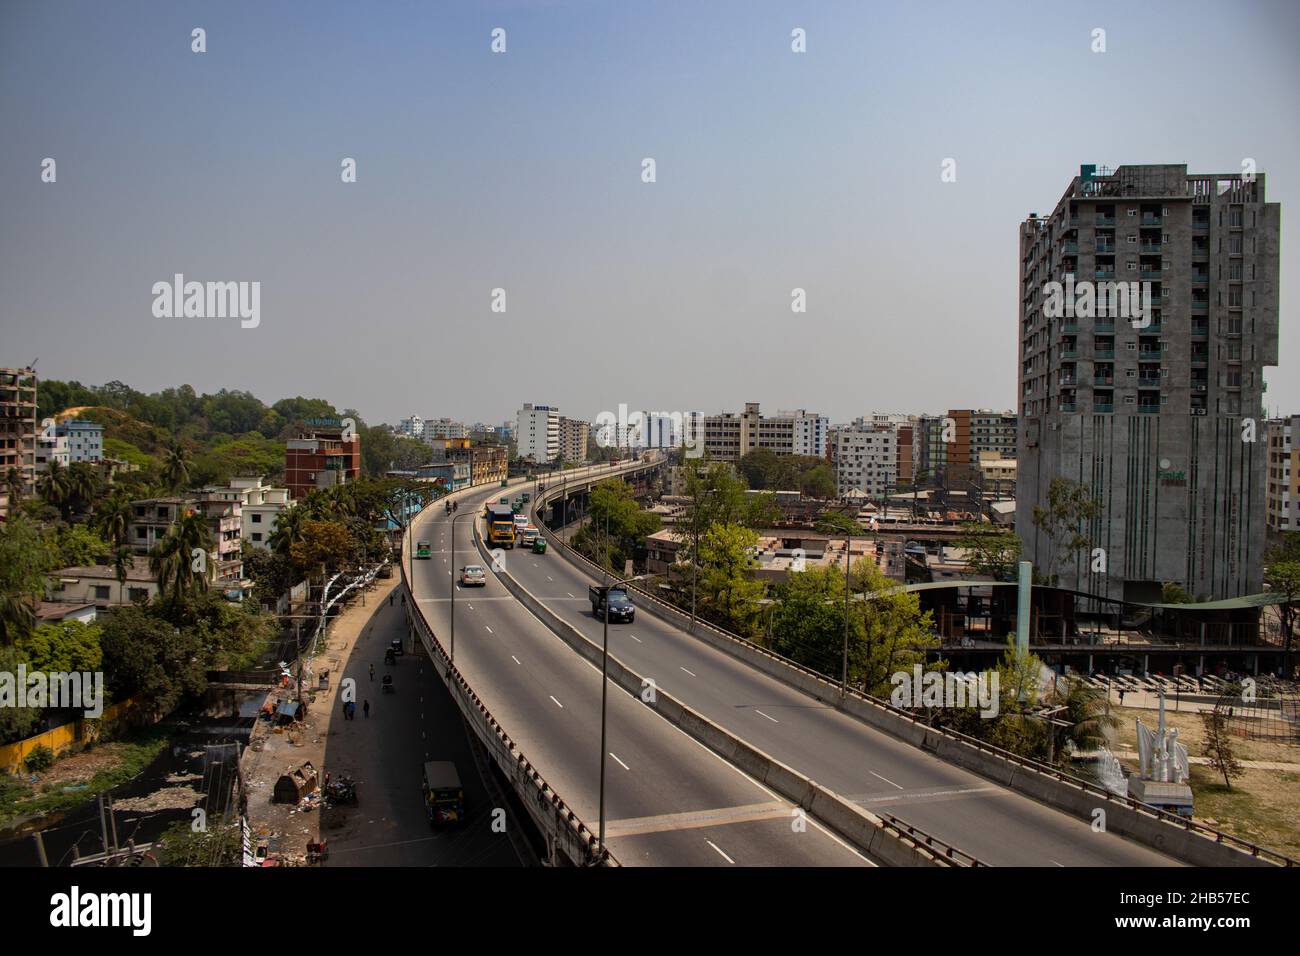 Landscape view of Akhtaruzzaman Flyover (Muradpur Flyover) in Chittagong city, Bangladesh Stock Photo